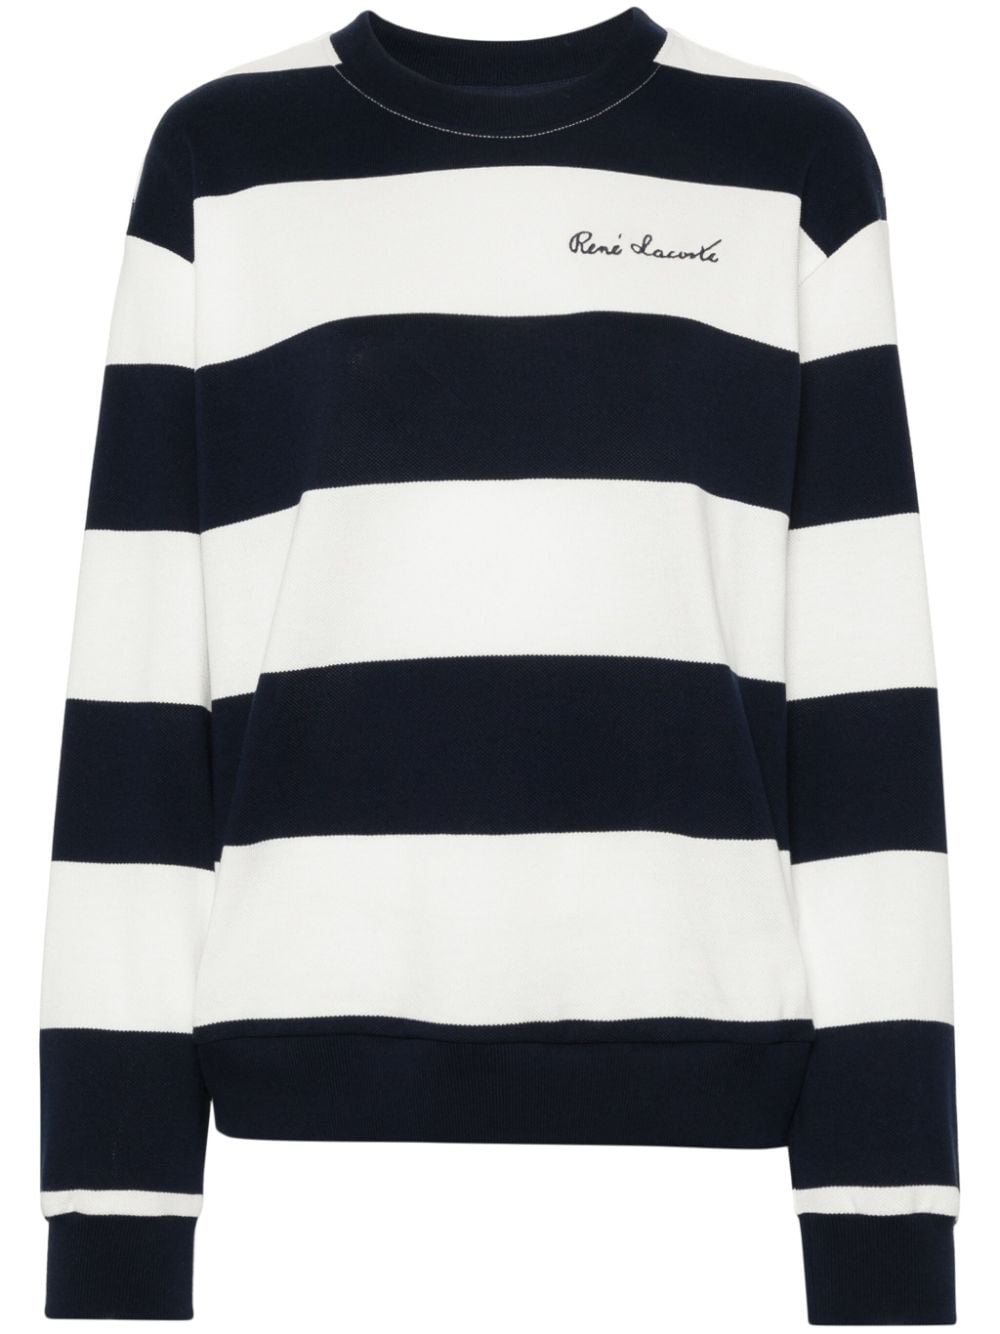 embroidered-logo striped sweatshirt - 1